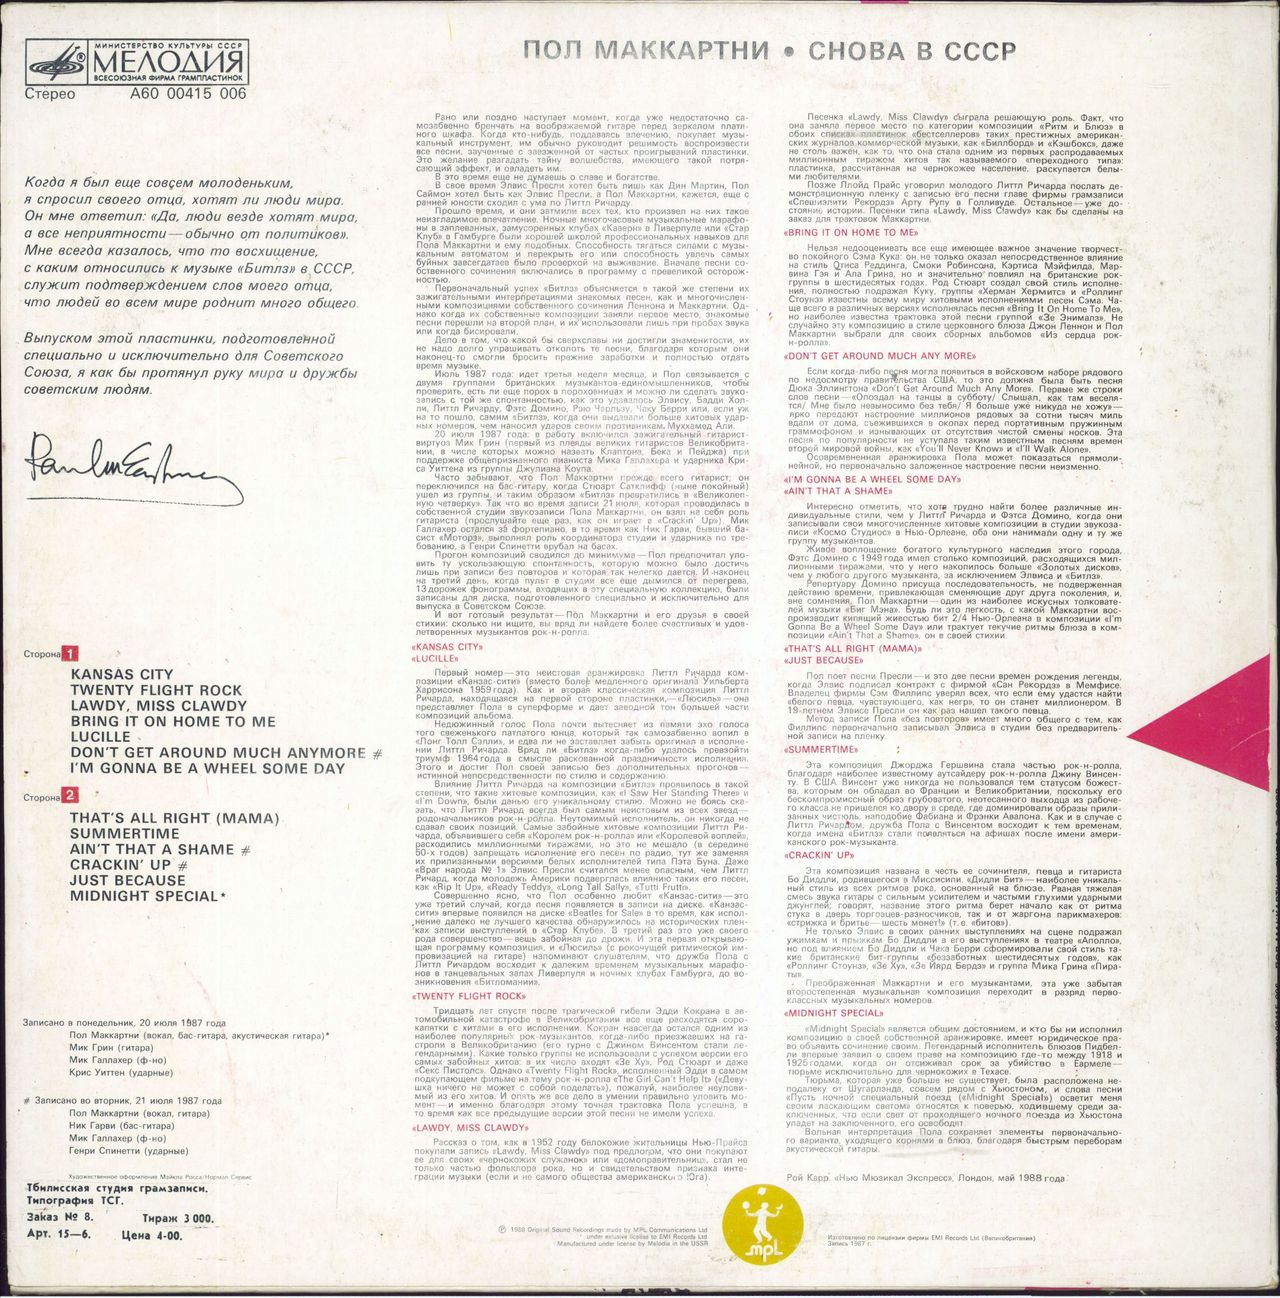  Choba B CCCP [LP]: CDs & Vinyl